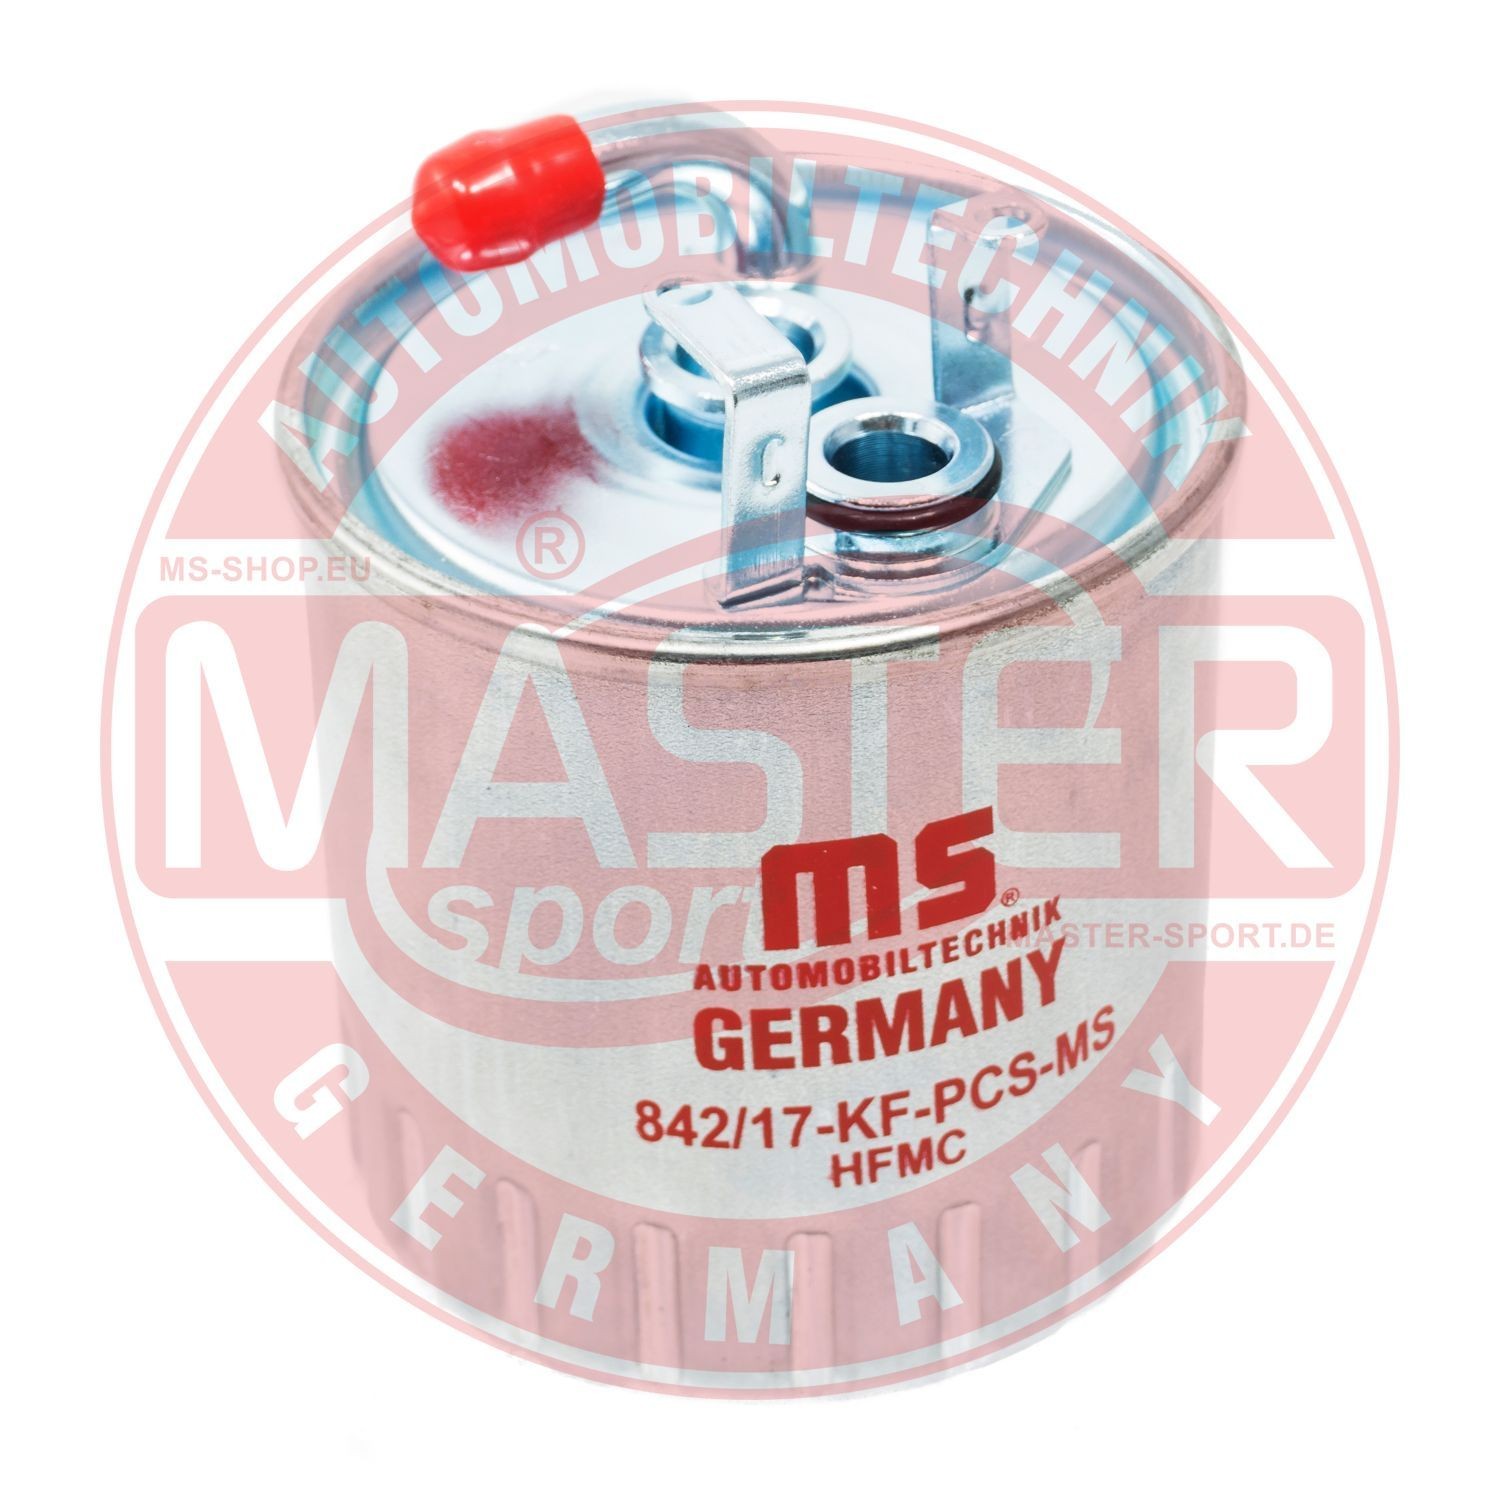 MASTER-SPORT 842/17-KF-PCS-MS Fuel filter In-Line Filter, 10mm